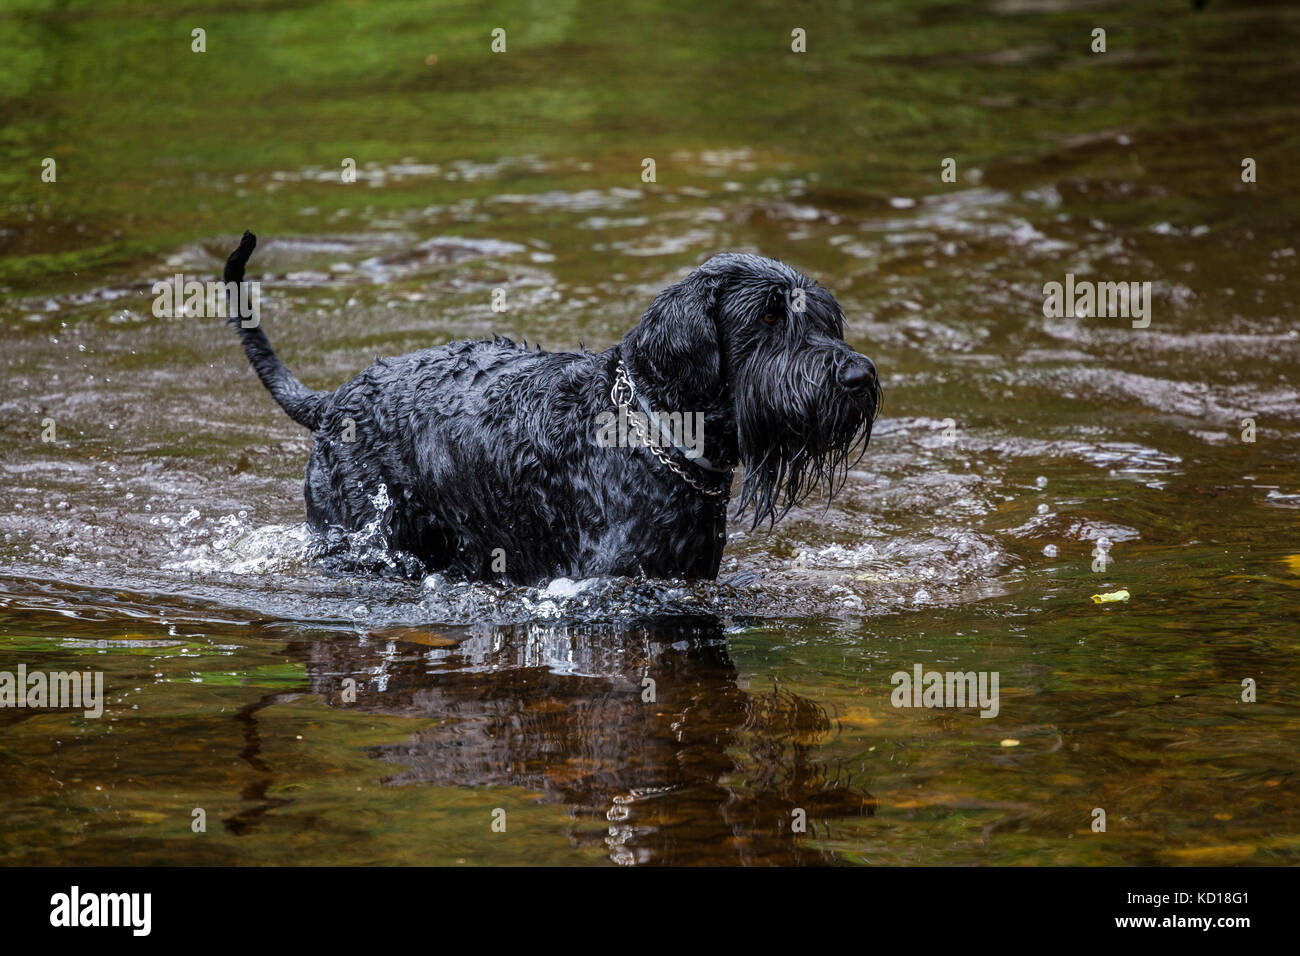 Big wet black schnauzer dog, standing in the river Stock Photo